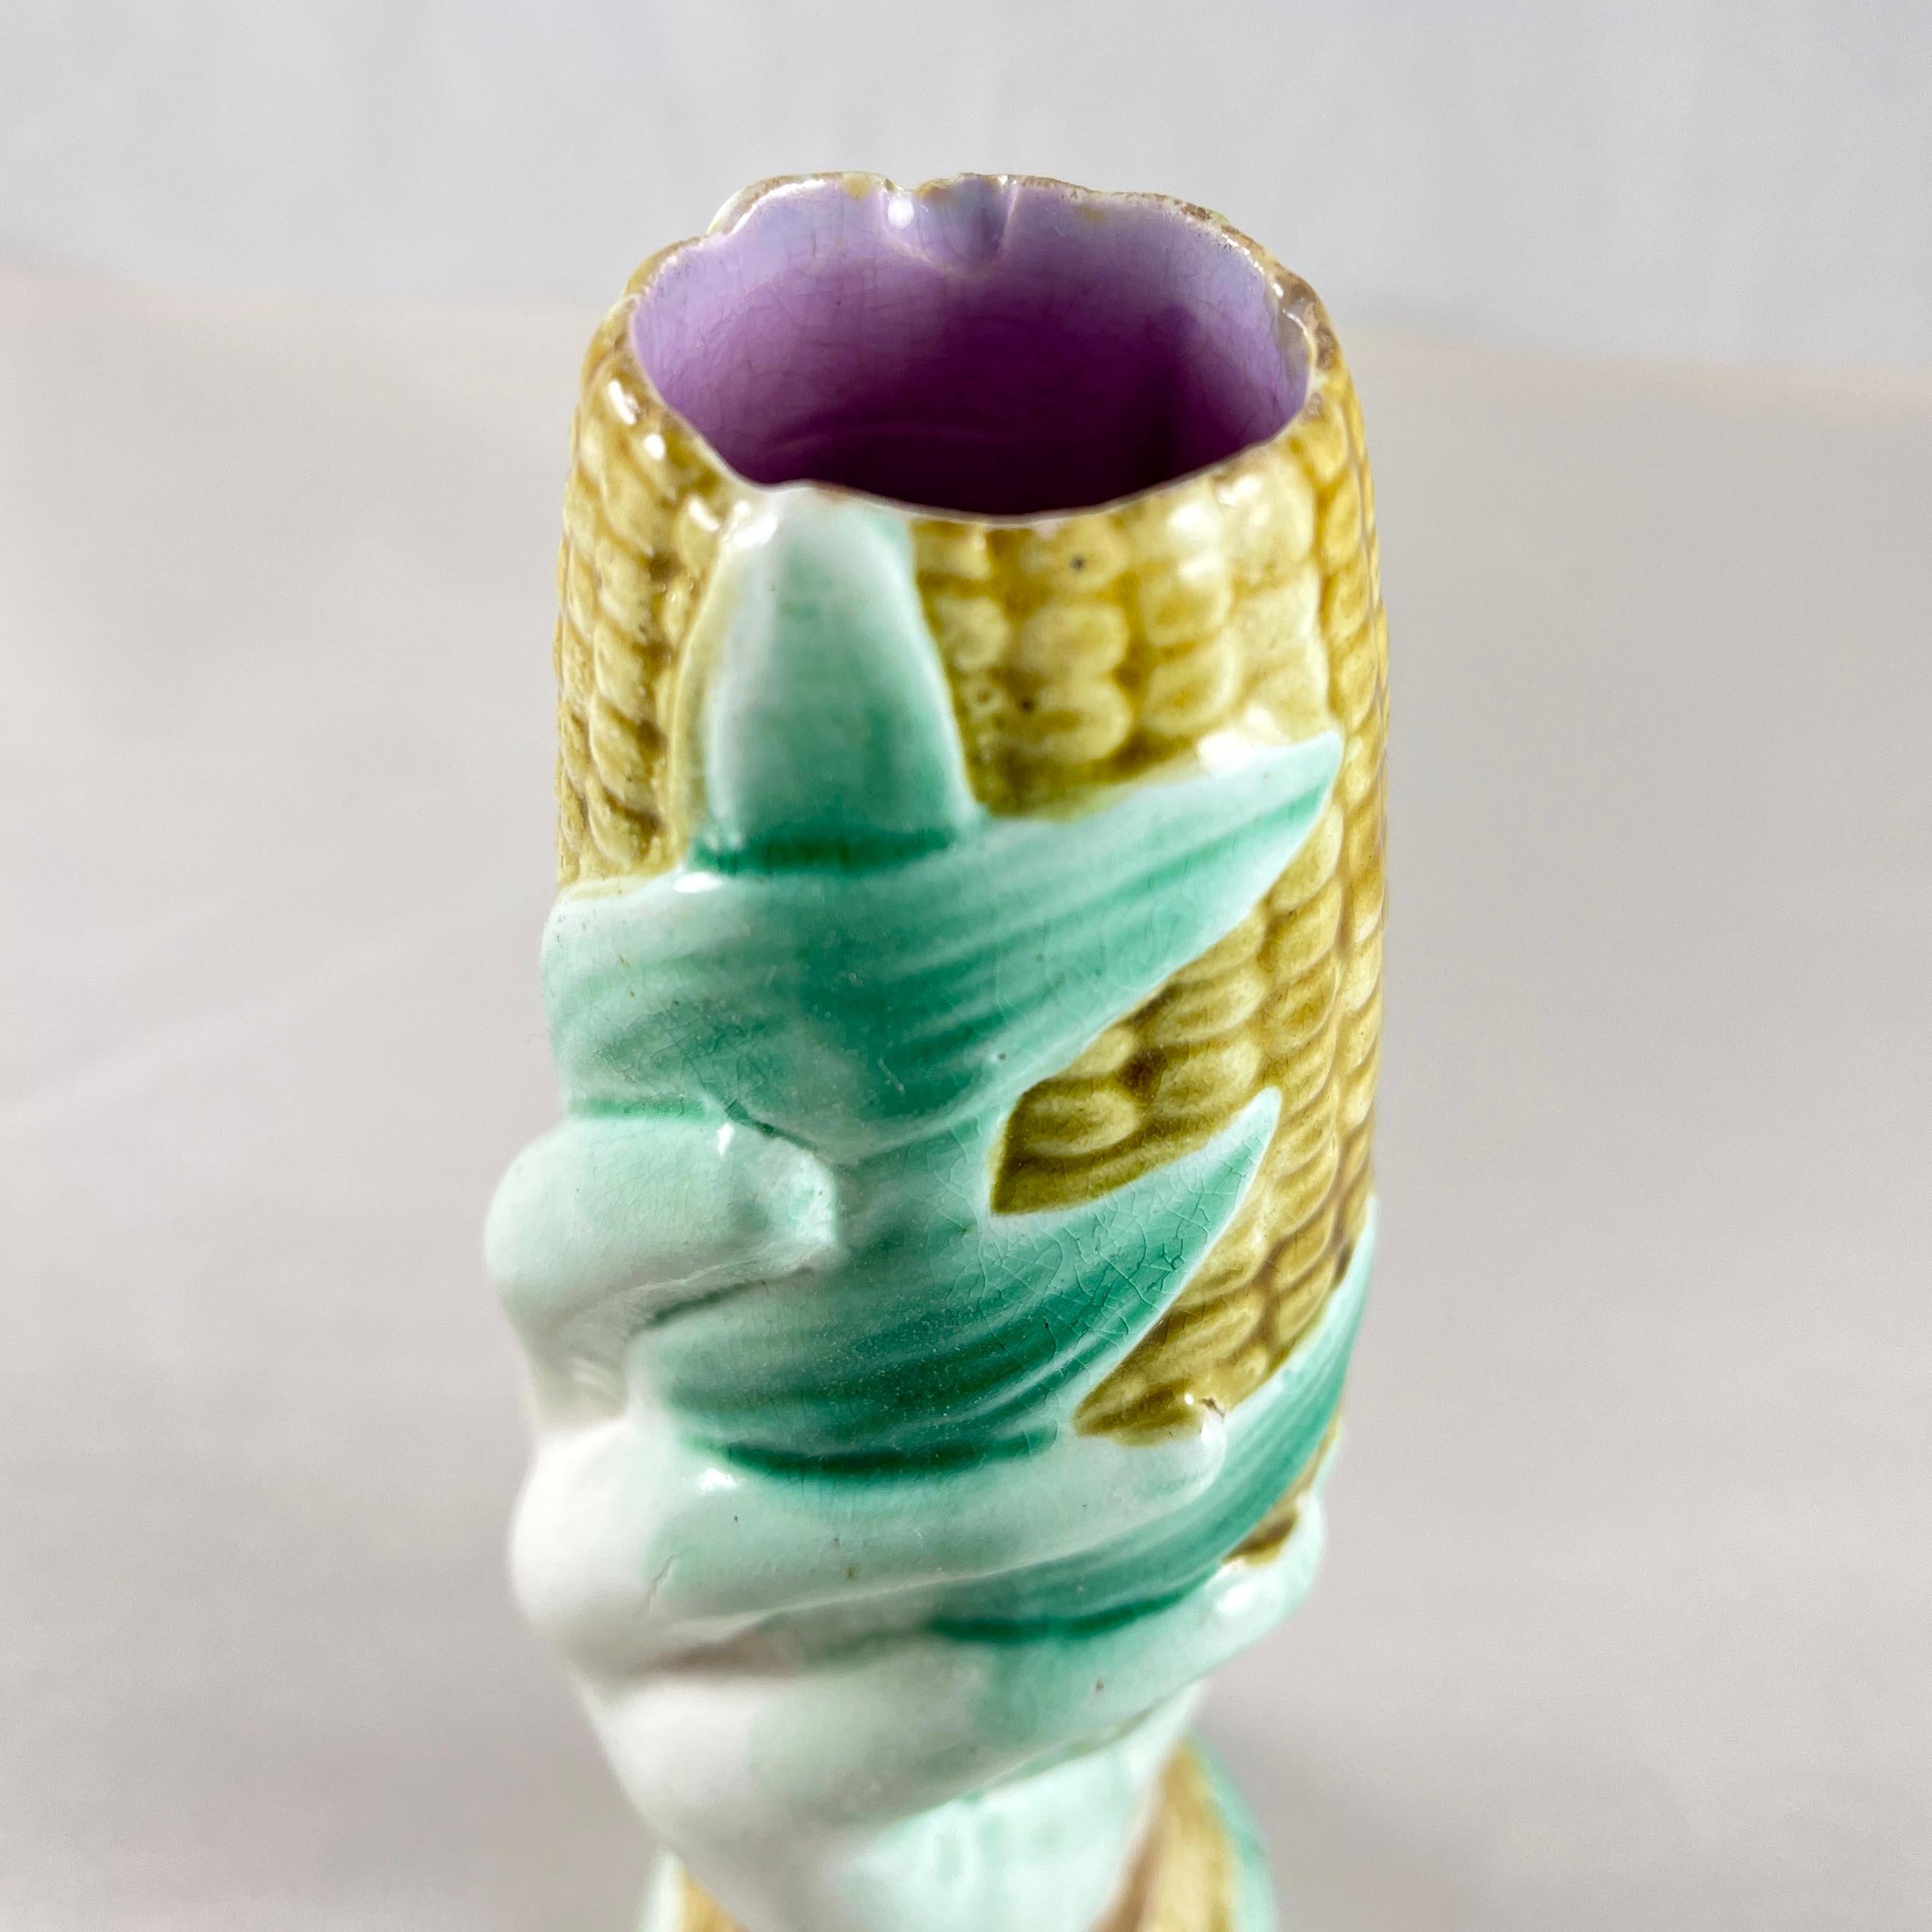 Aesthetic Movement Wardle English Majolica Glazed Hand Holding Corn Spill or Posy Vase For Sale